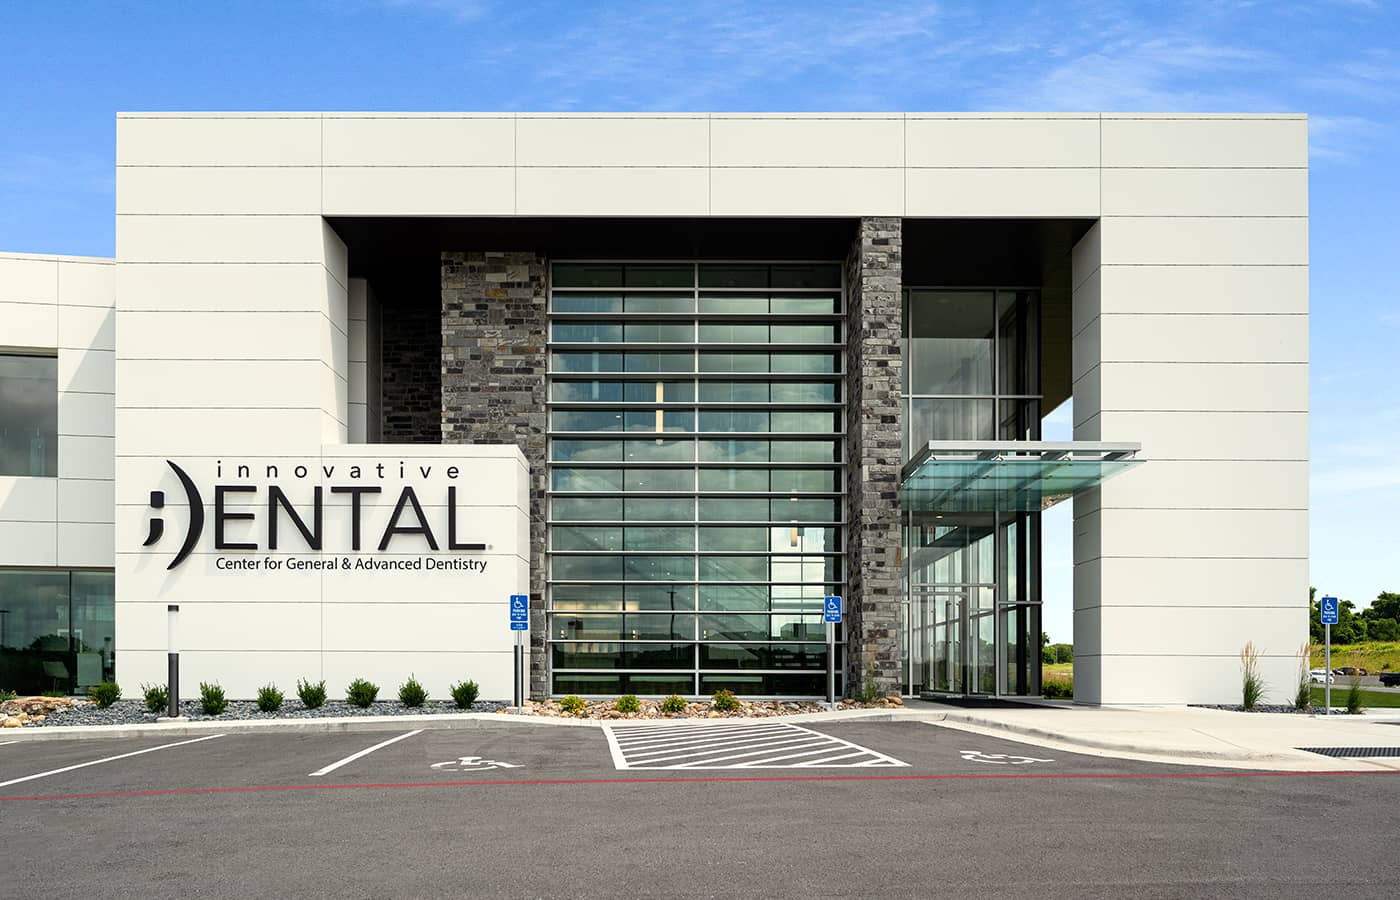 The exterior of Innovative Dental.